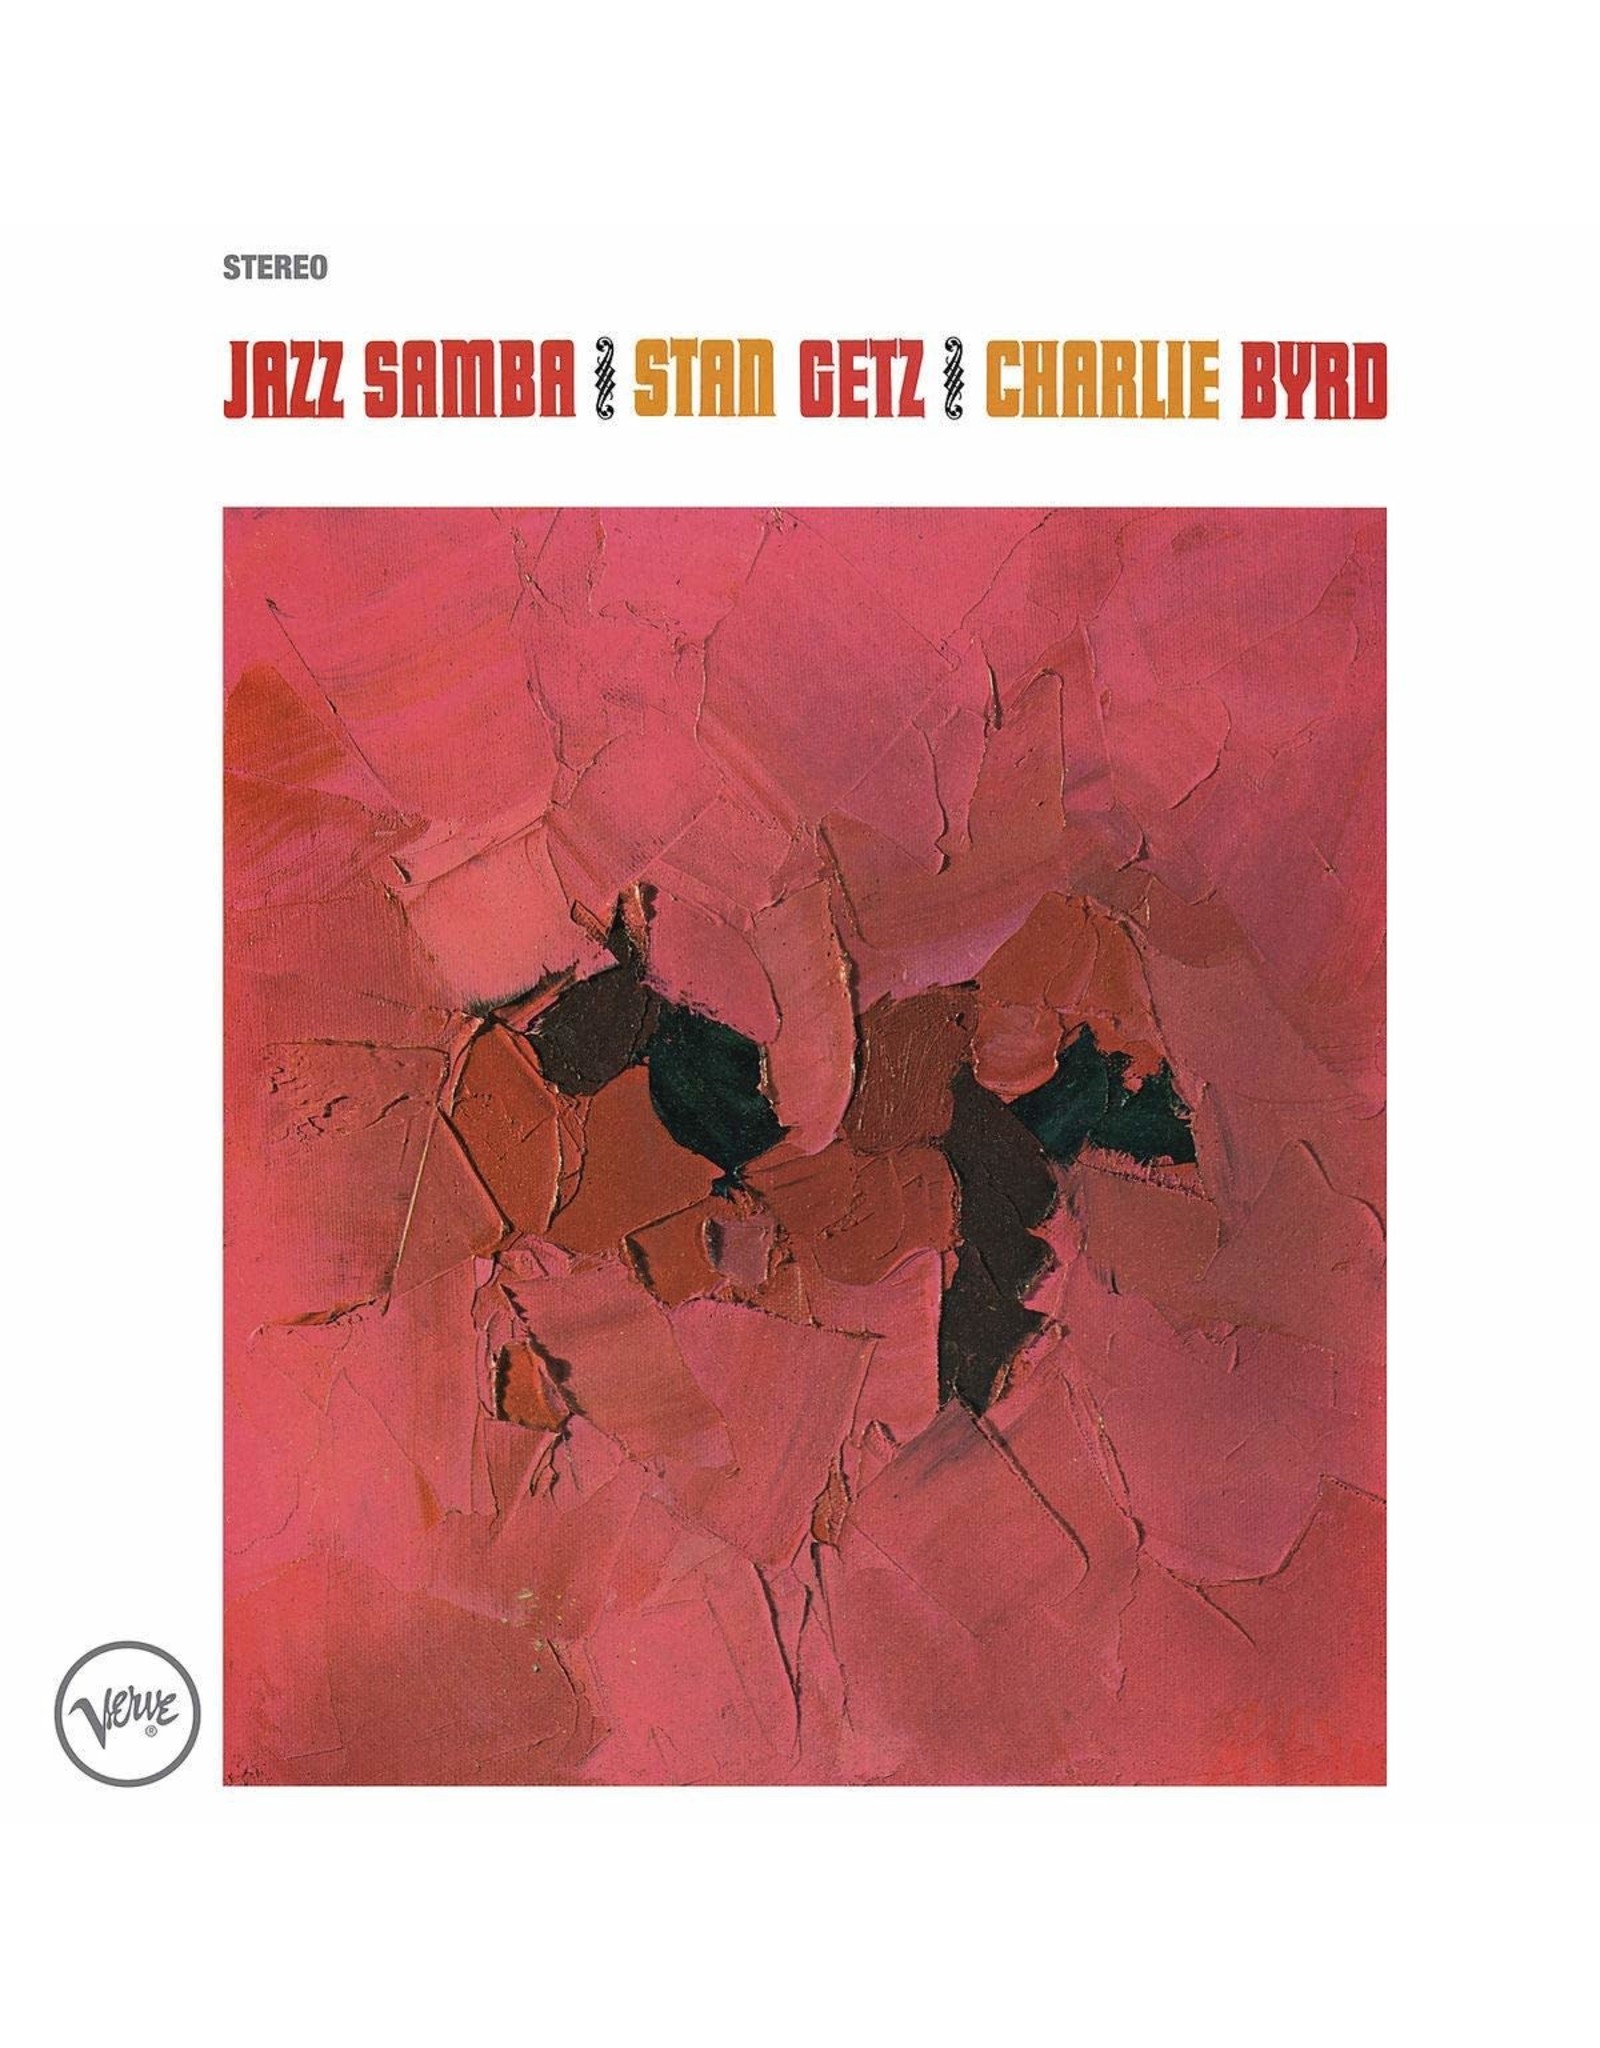 Stan Getz & Charlie Byrd - Jazz Samba (Acoustic Sounds Series)